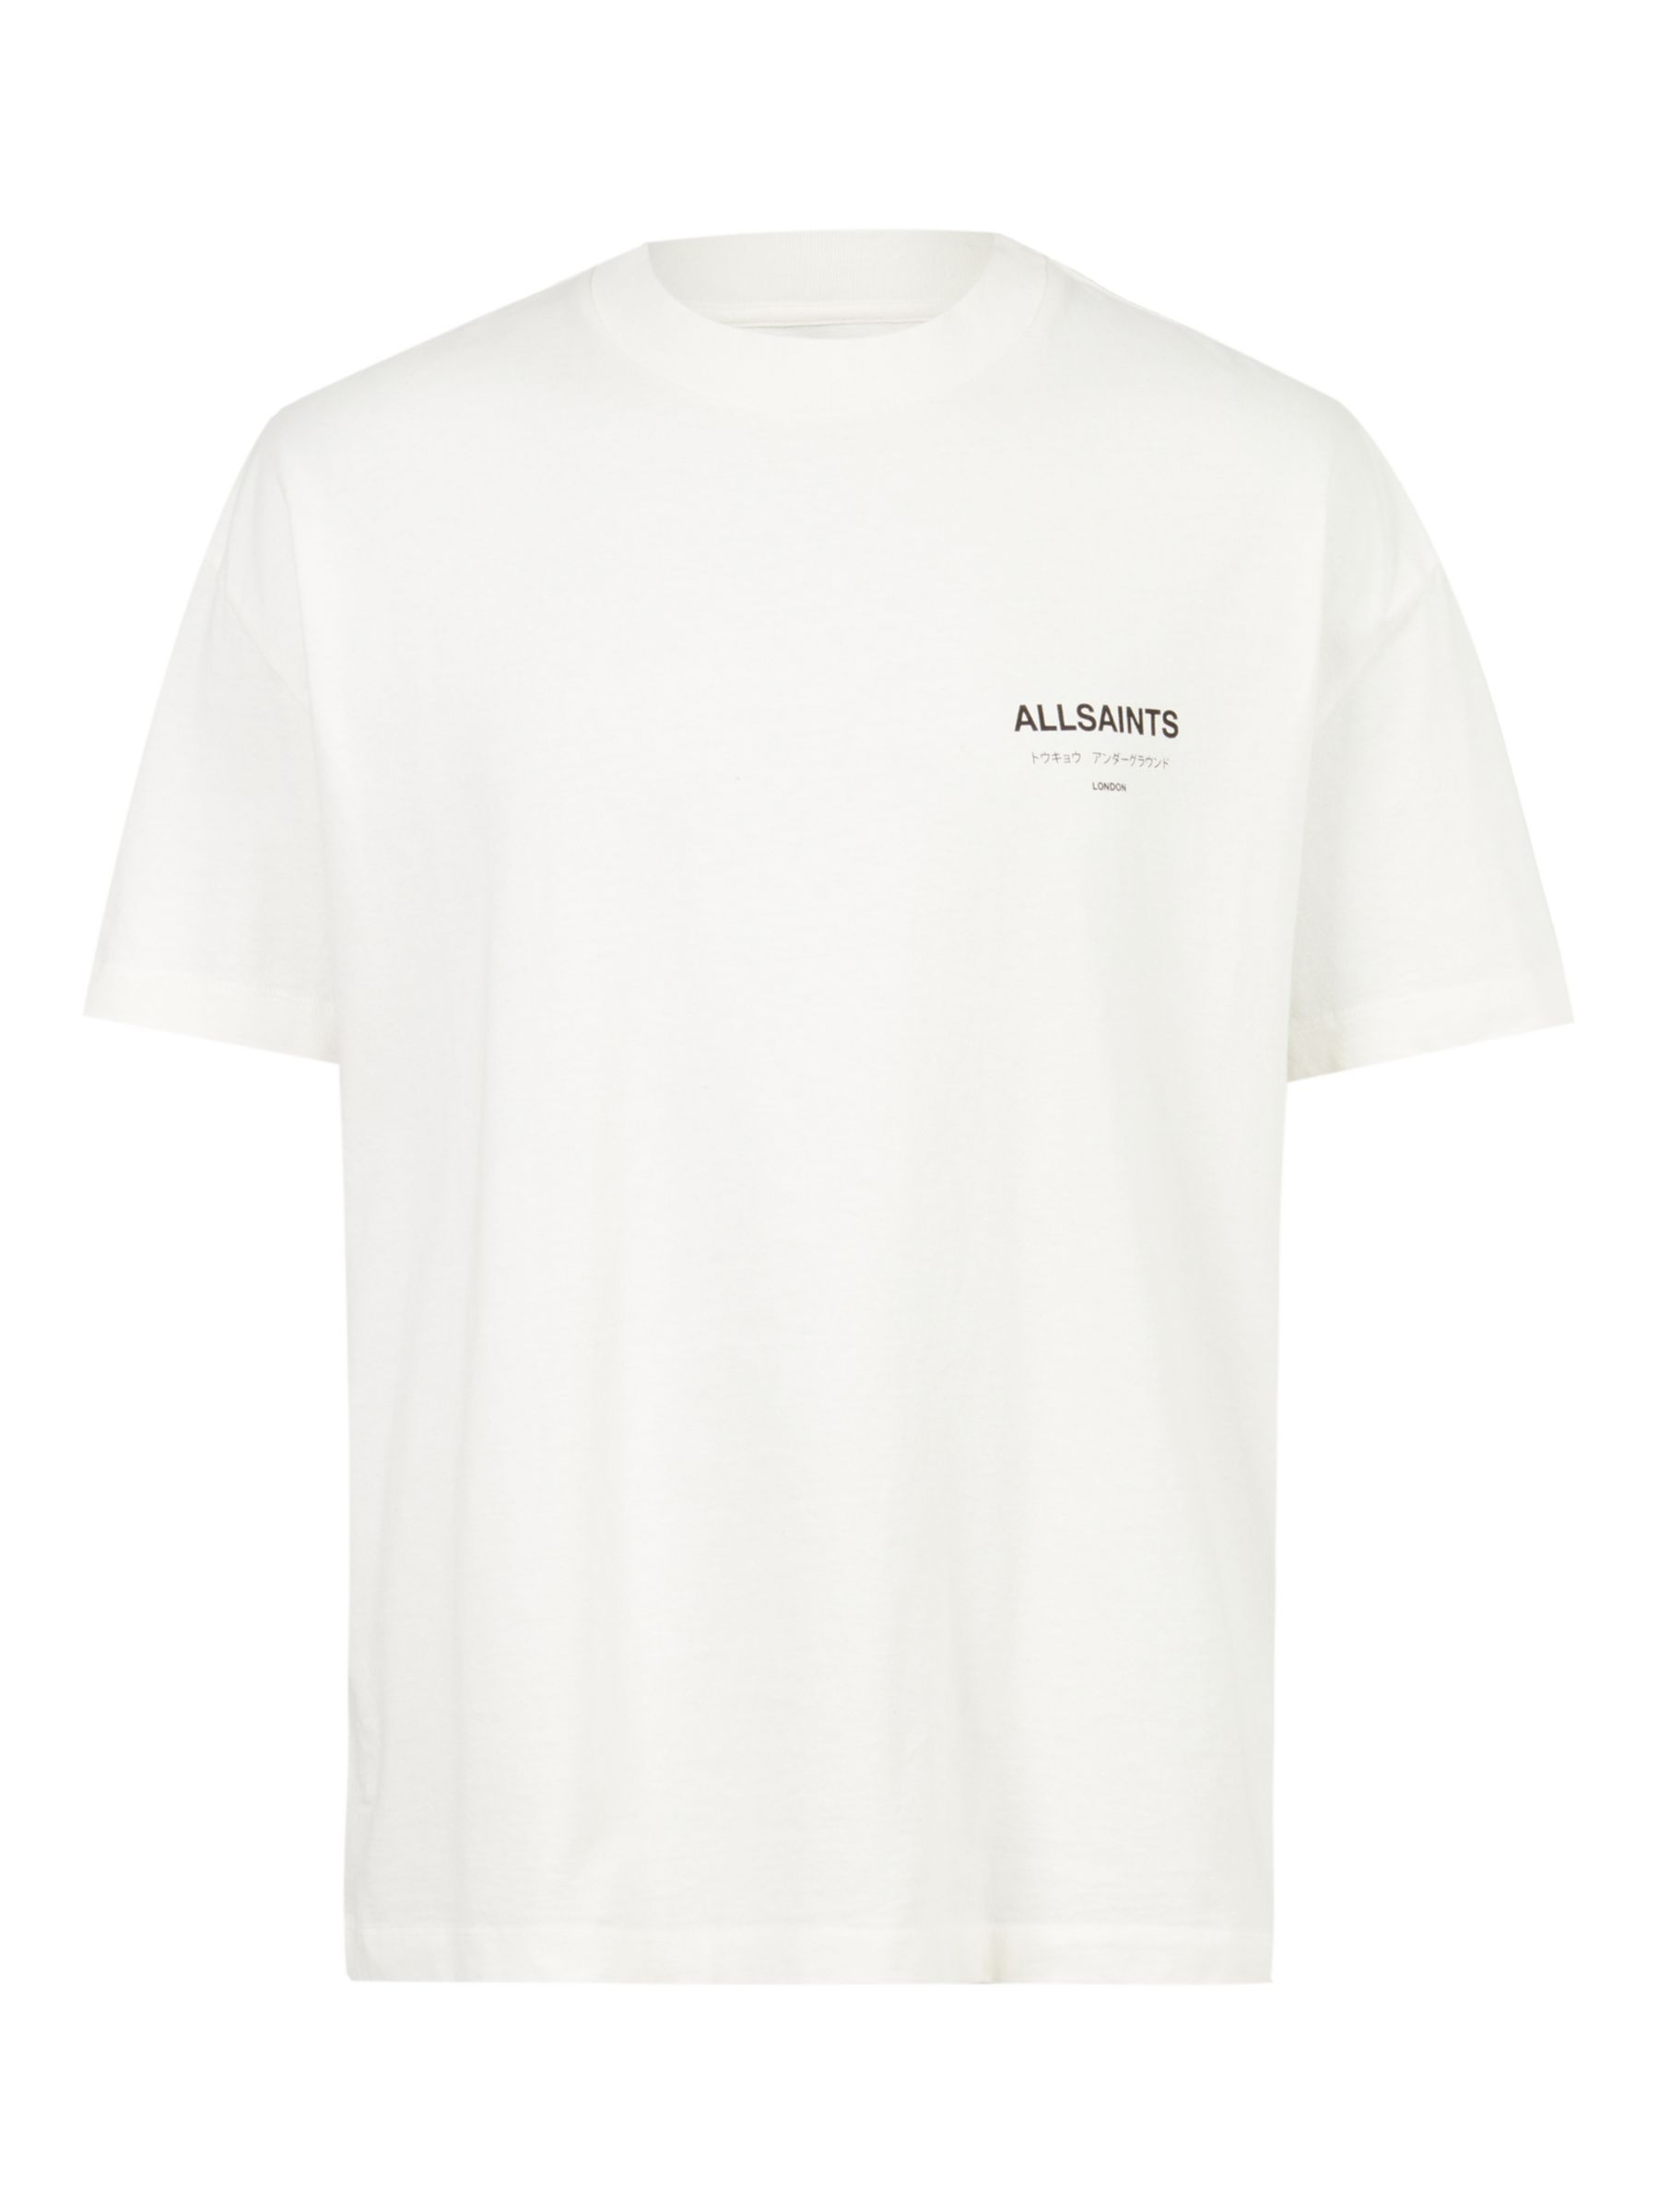 AllSaints Underground T-Shirt, Ashen White at John Lewis & Partners